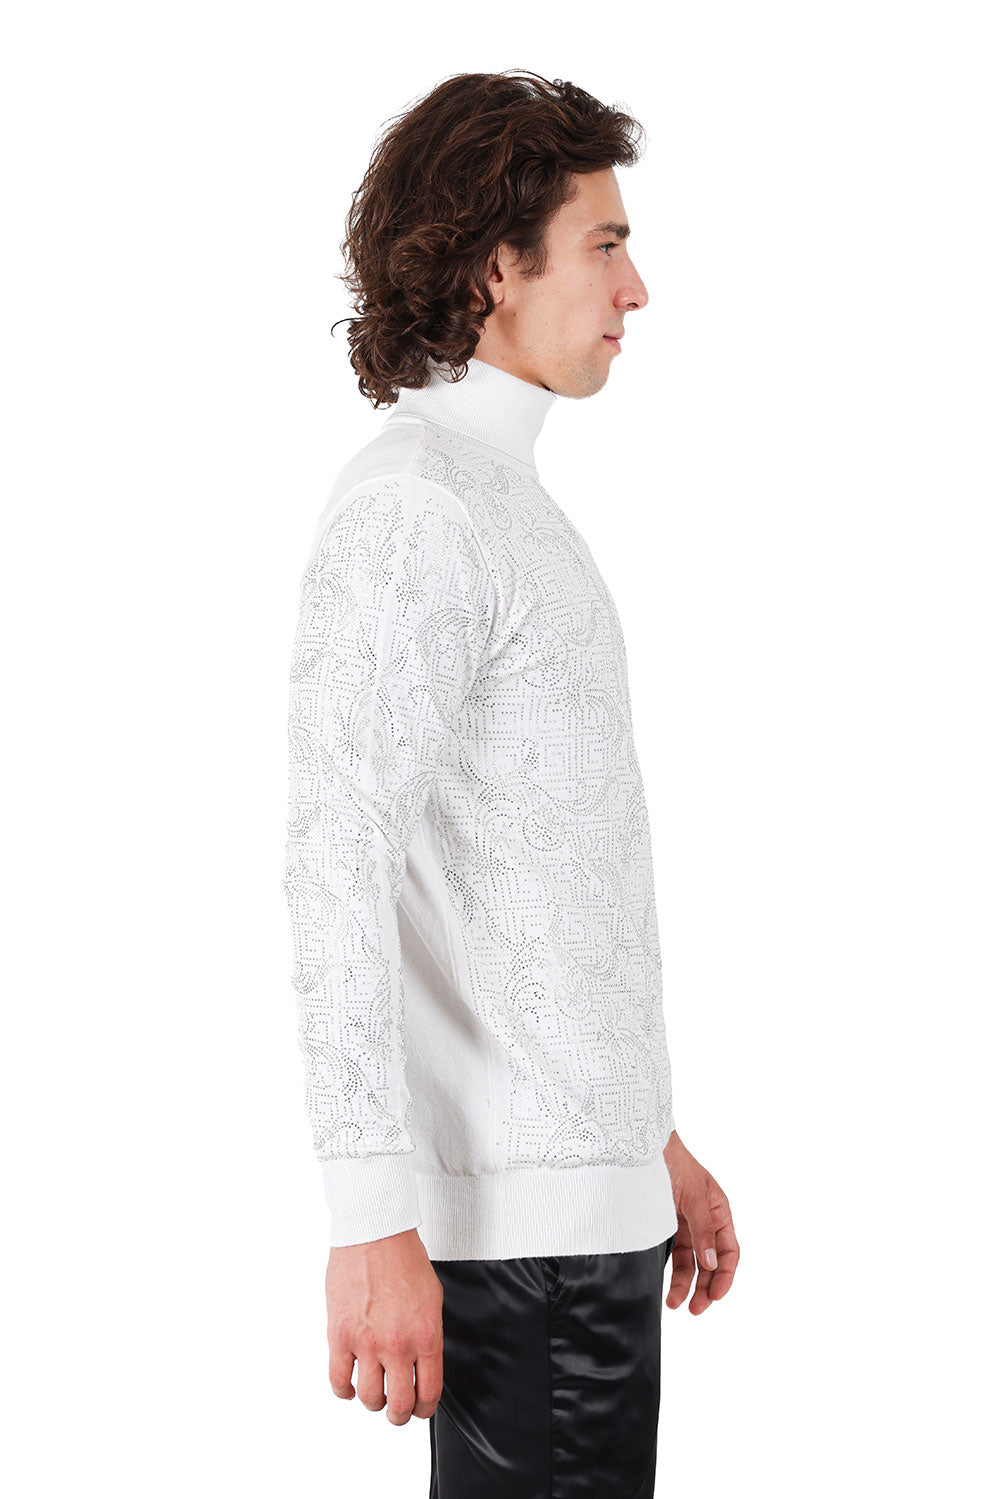 White and Silver Greek Key Pattern Turtleneck Sweater